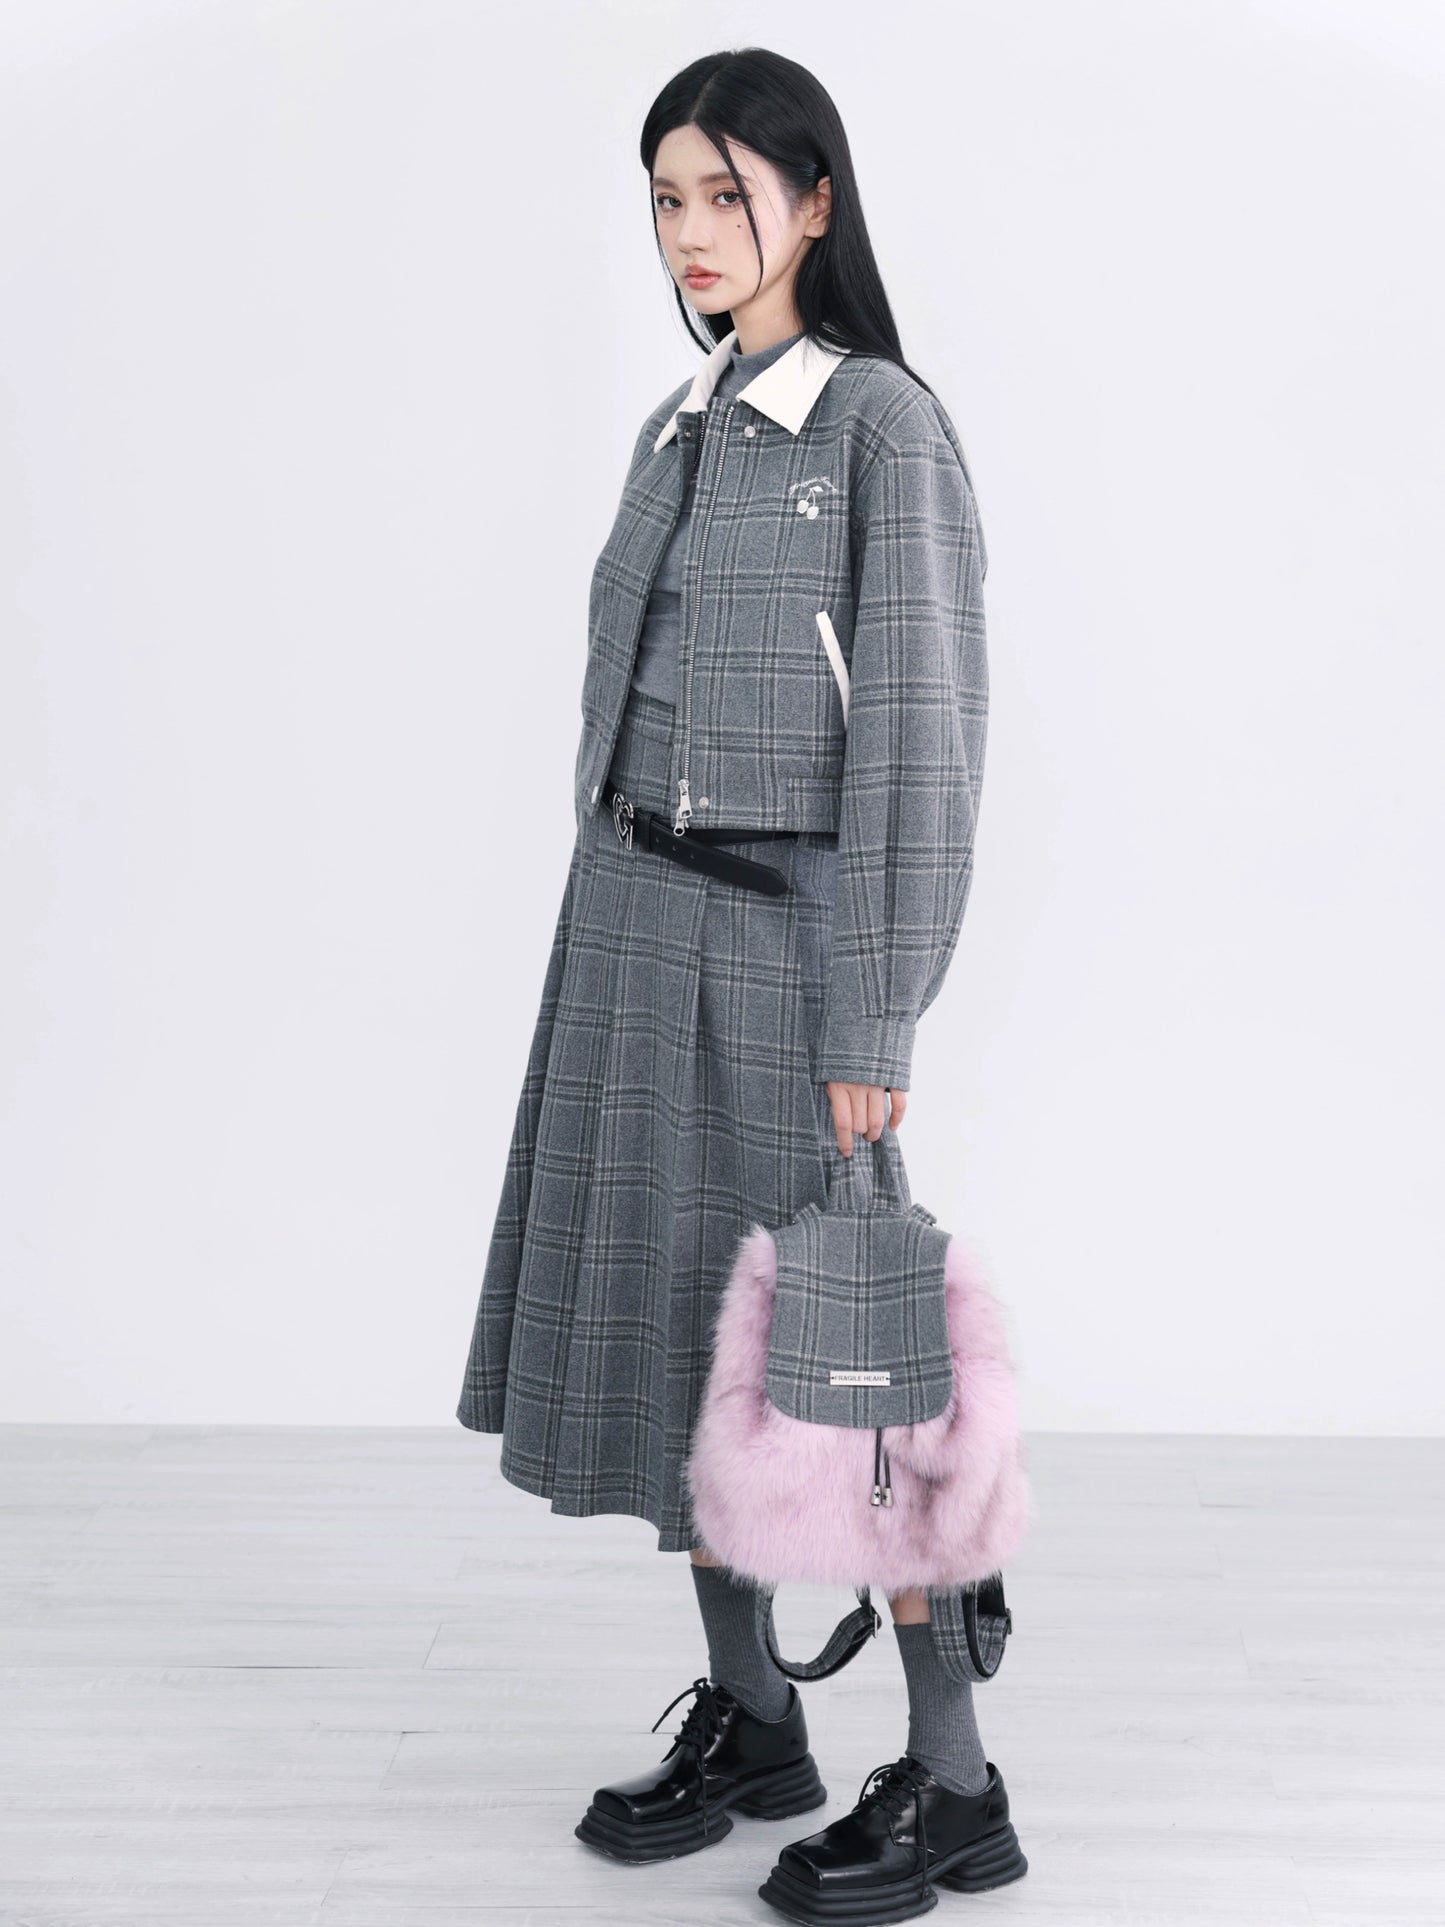 Two-piece Gray Plaid Cotton Jacket Skirt Set